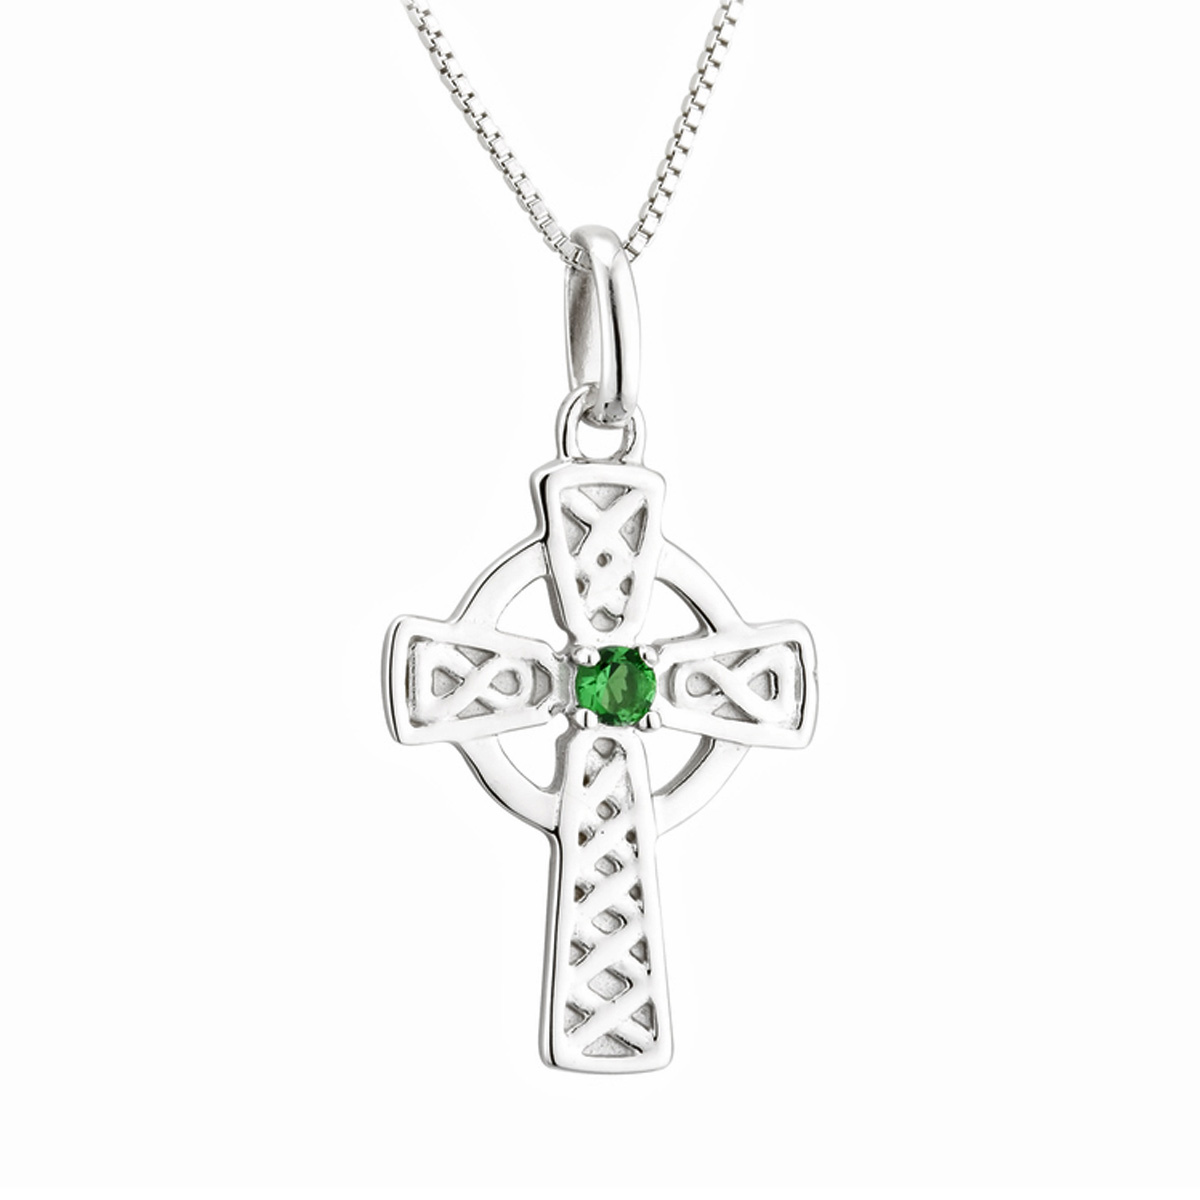 Crystal Cross - Keltisches Kreuz Kette & Anhänger aus Irland - Sterling Silber & Kristall